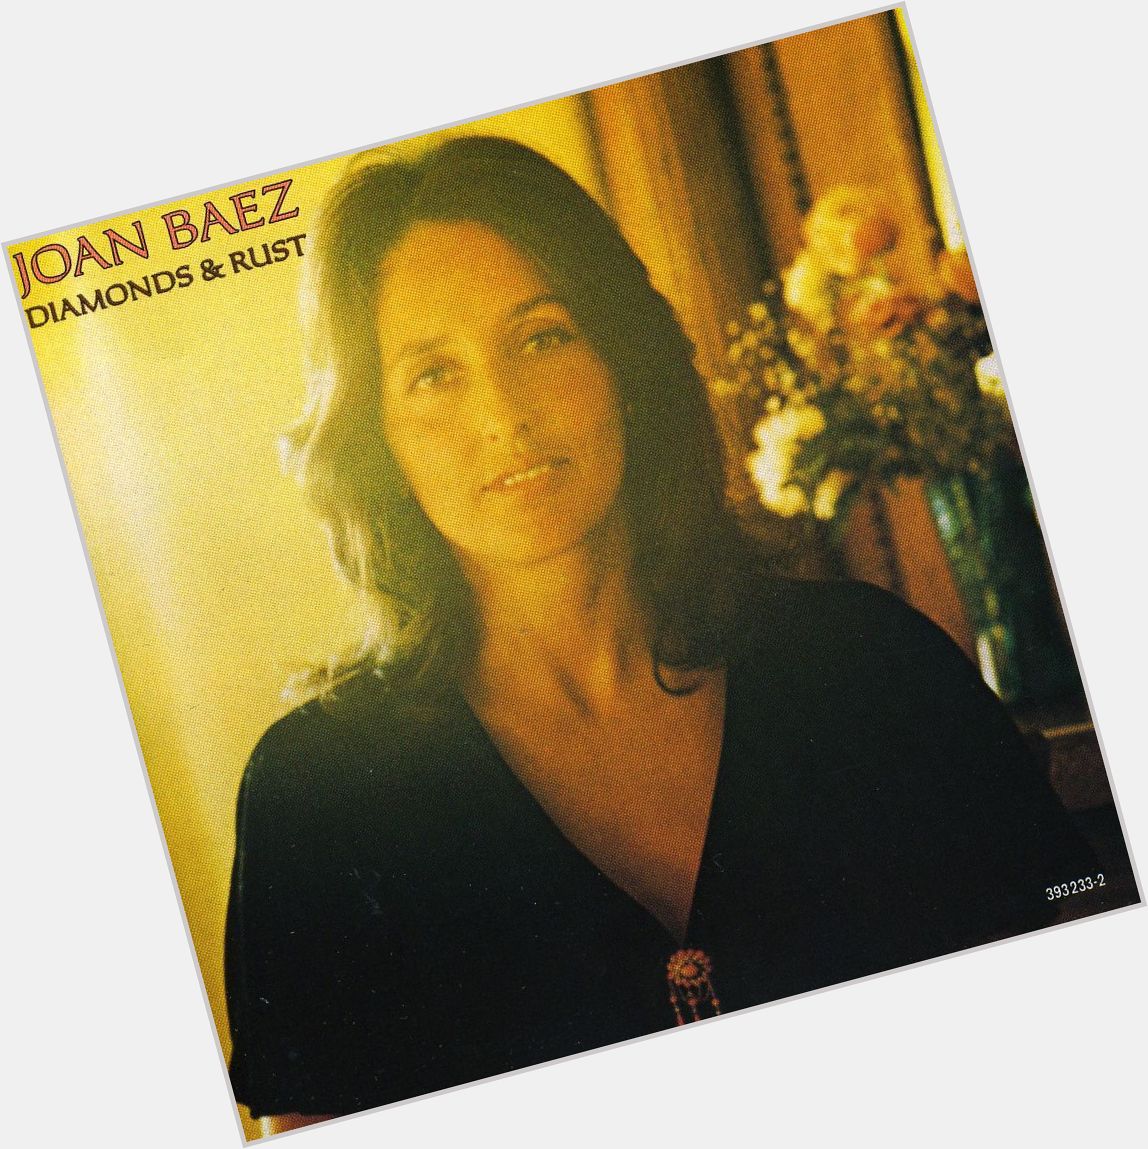 Happy Birthday, Listen to Discumentary: Joan Baez \Diamonds & Rust\

 